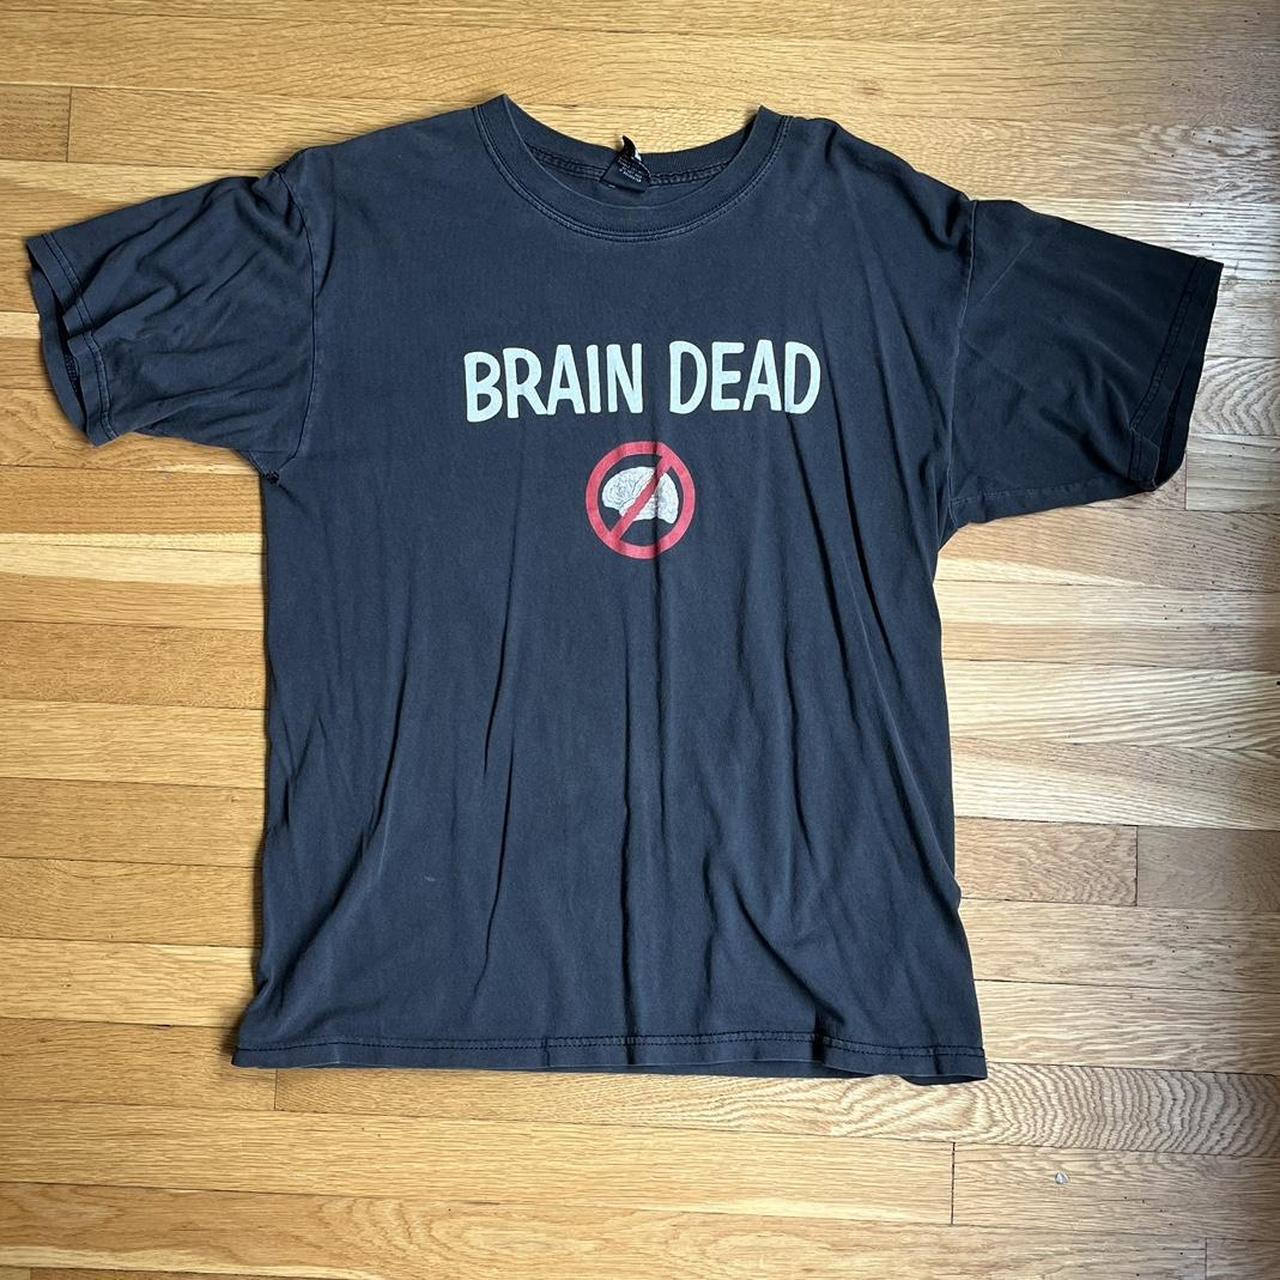 Vintage brain dead t shirt flaw is a small hole in... - Depop